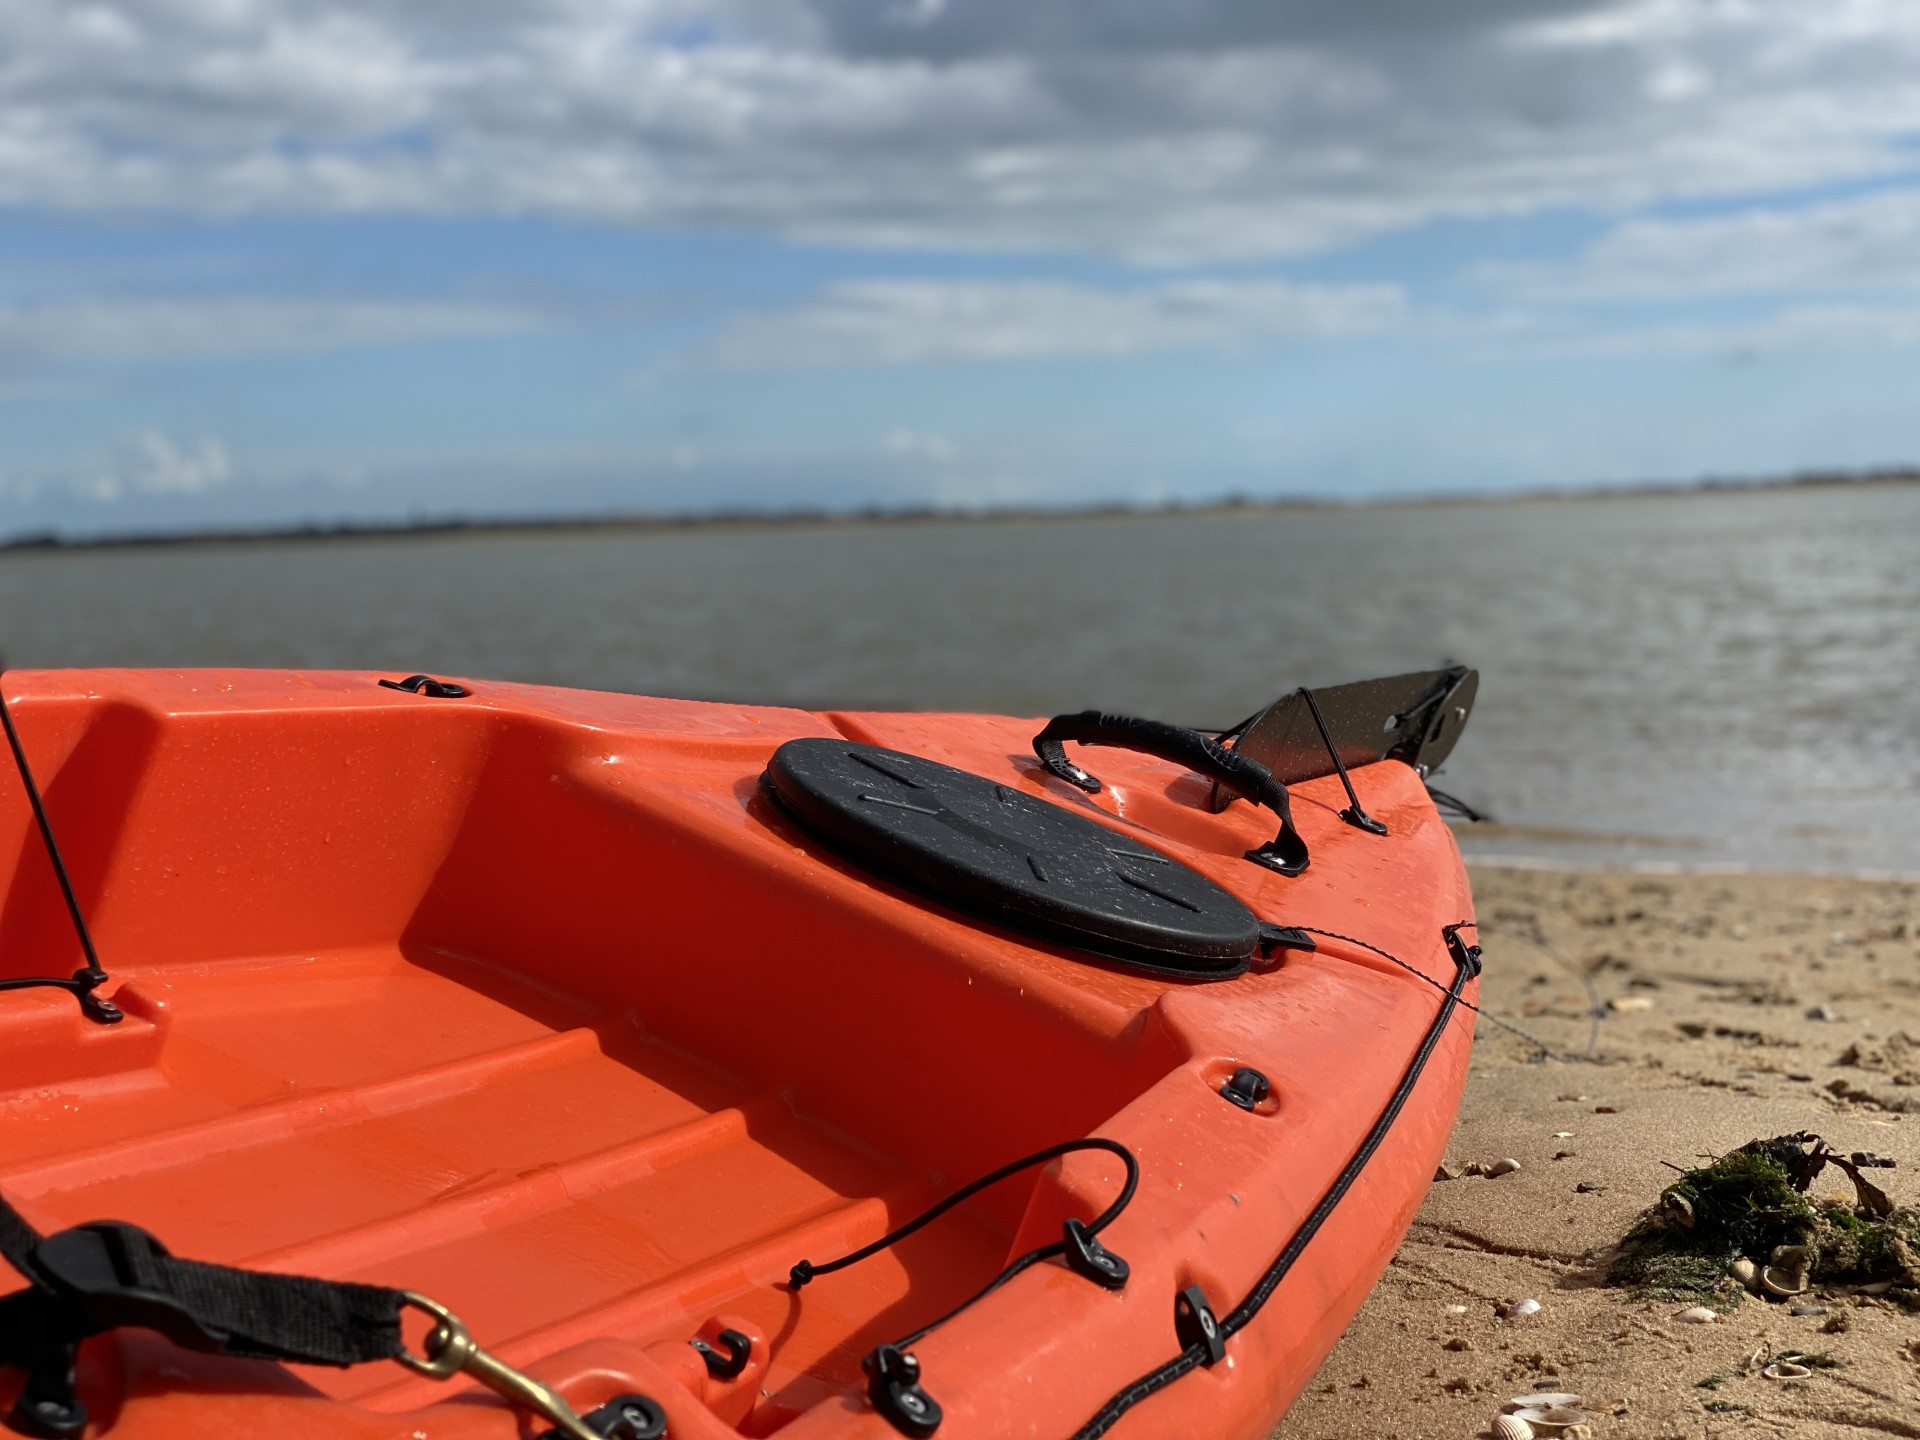 The stern of an orange sit-on-top kayak.